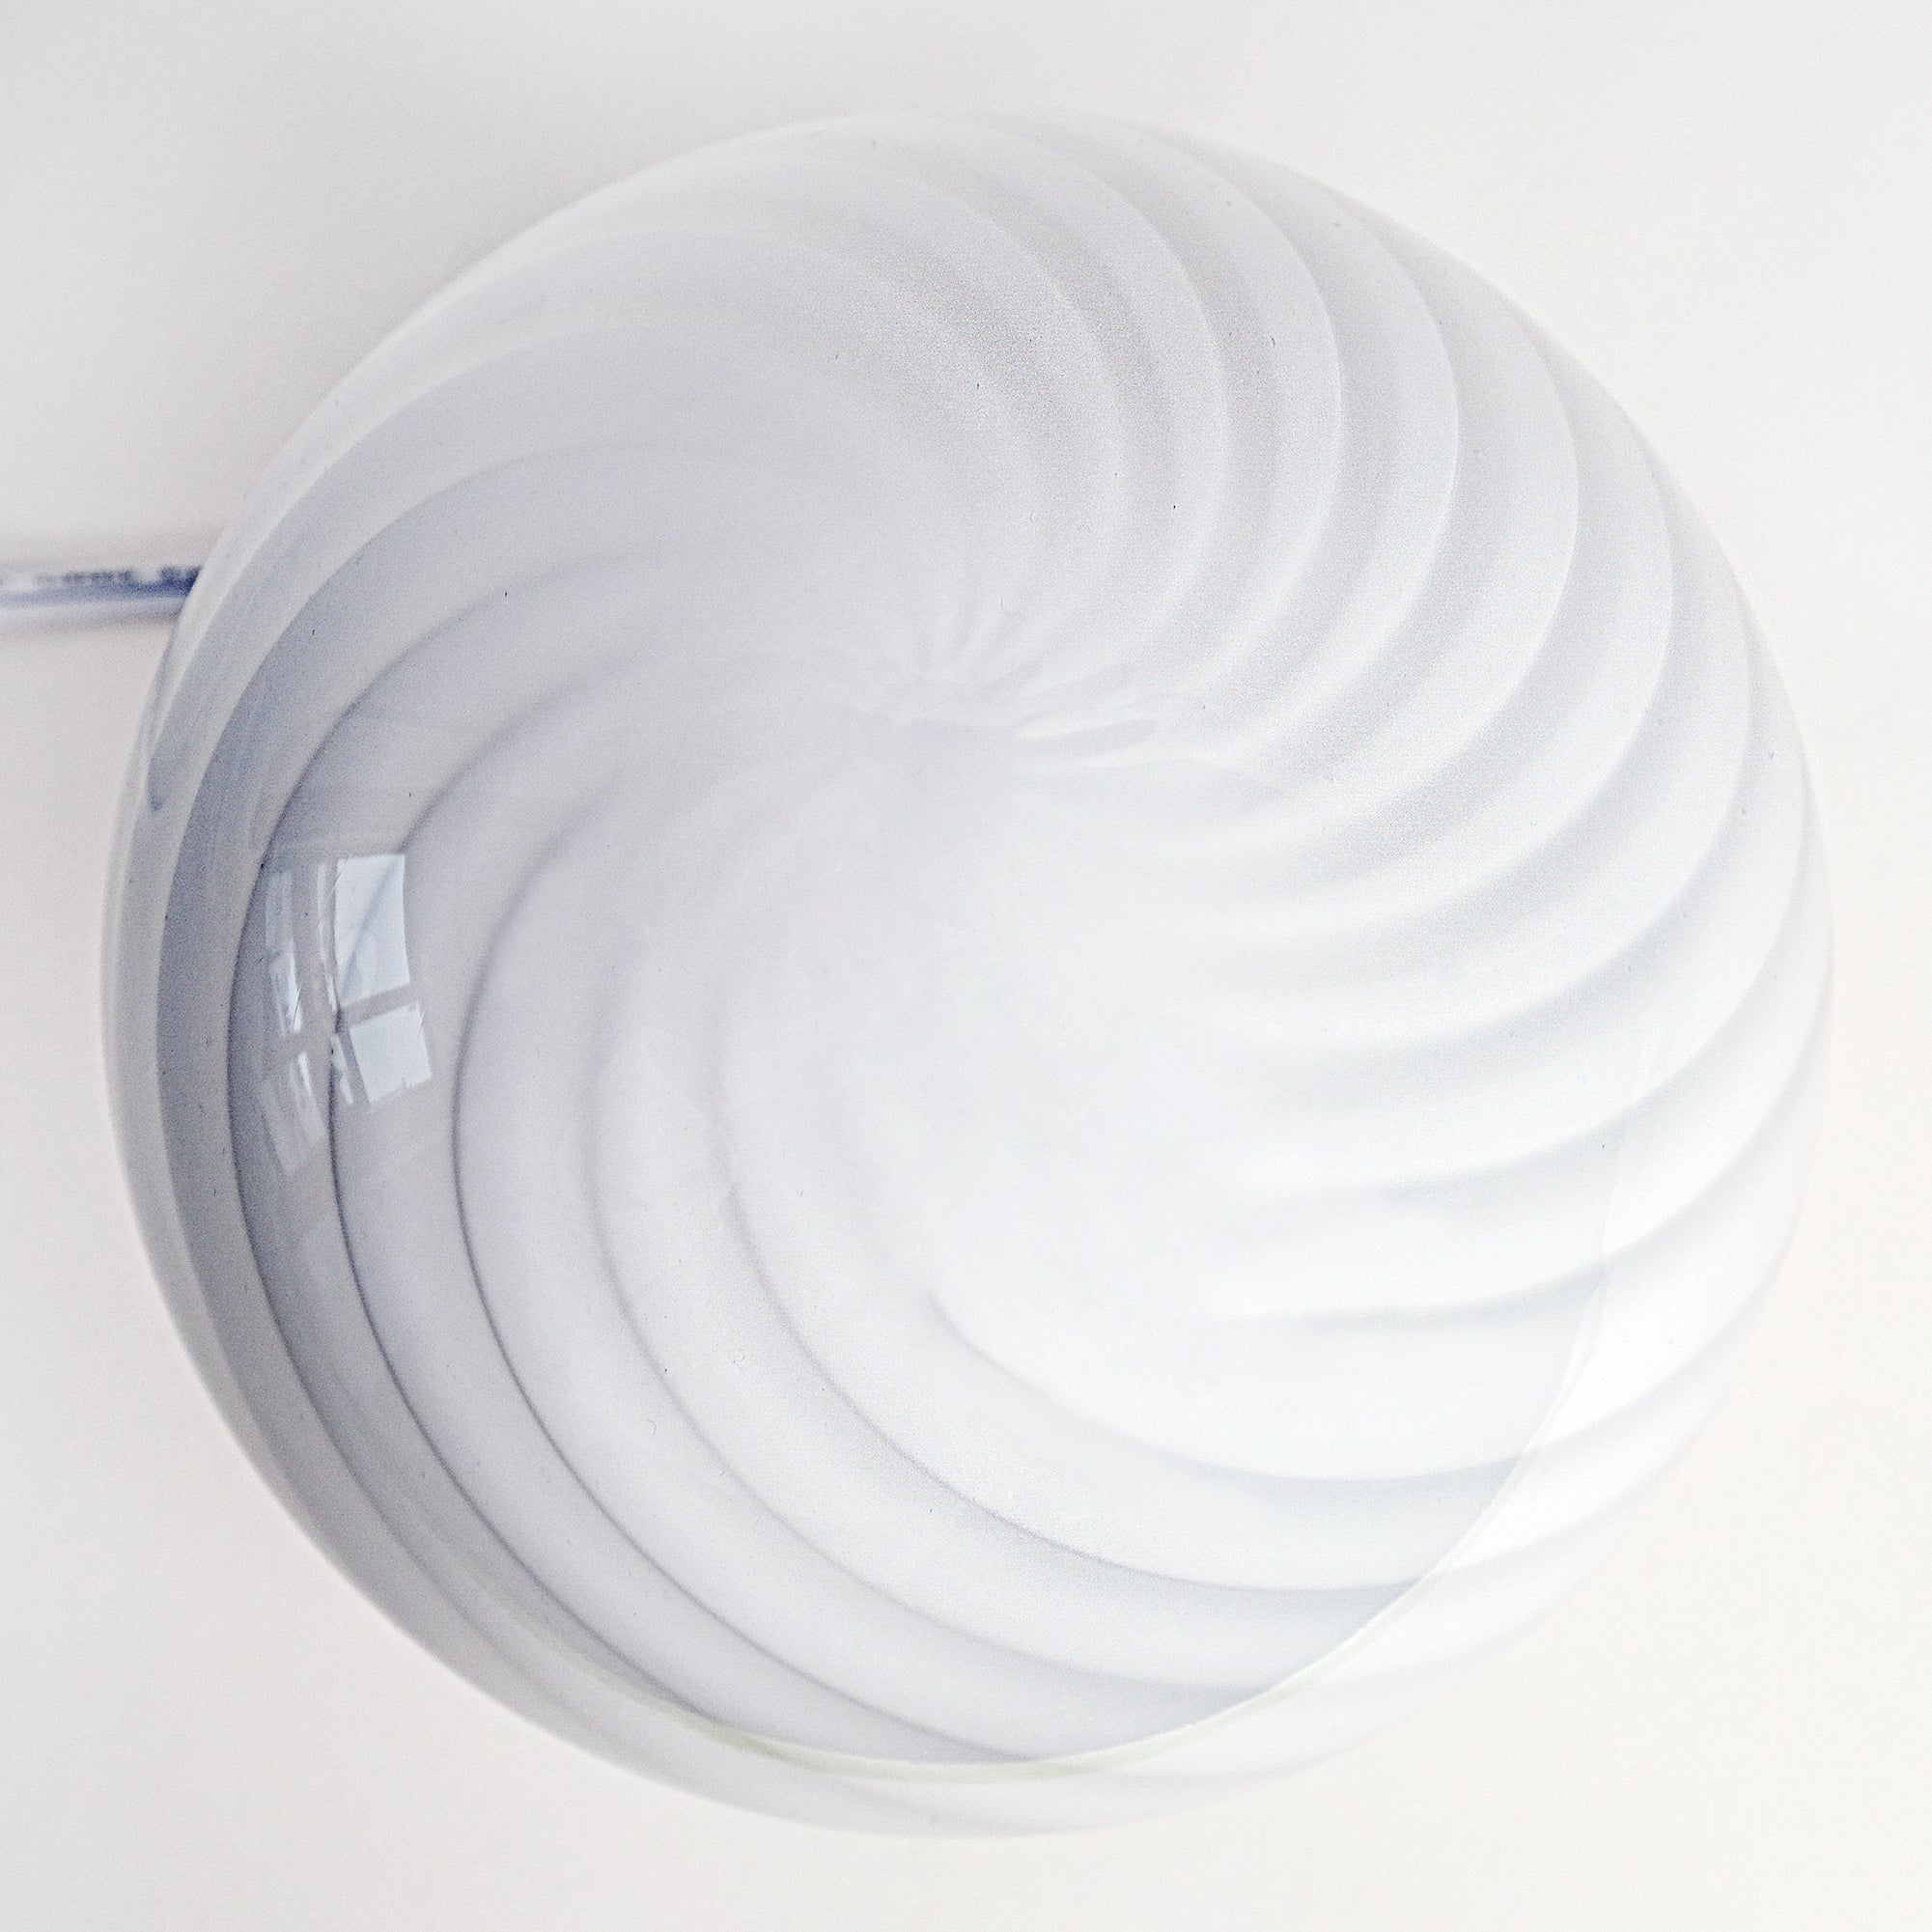 Glass Mushroom Table Lamp, Petite Close Top, White